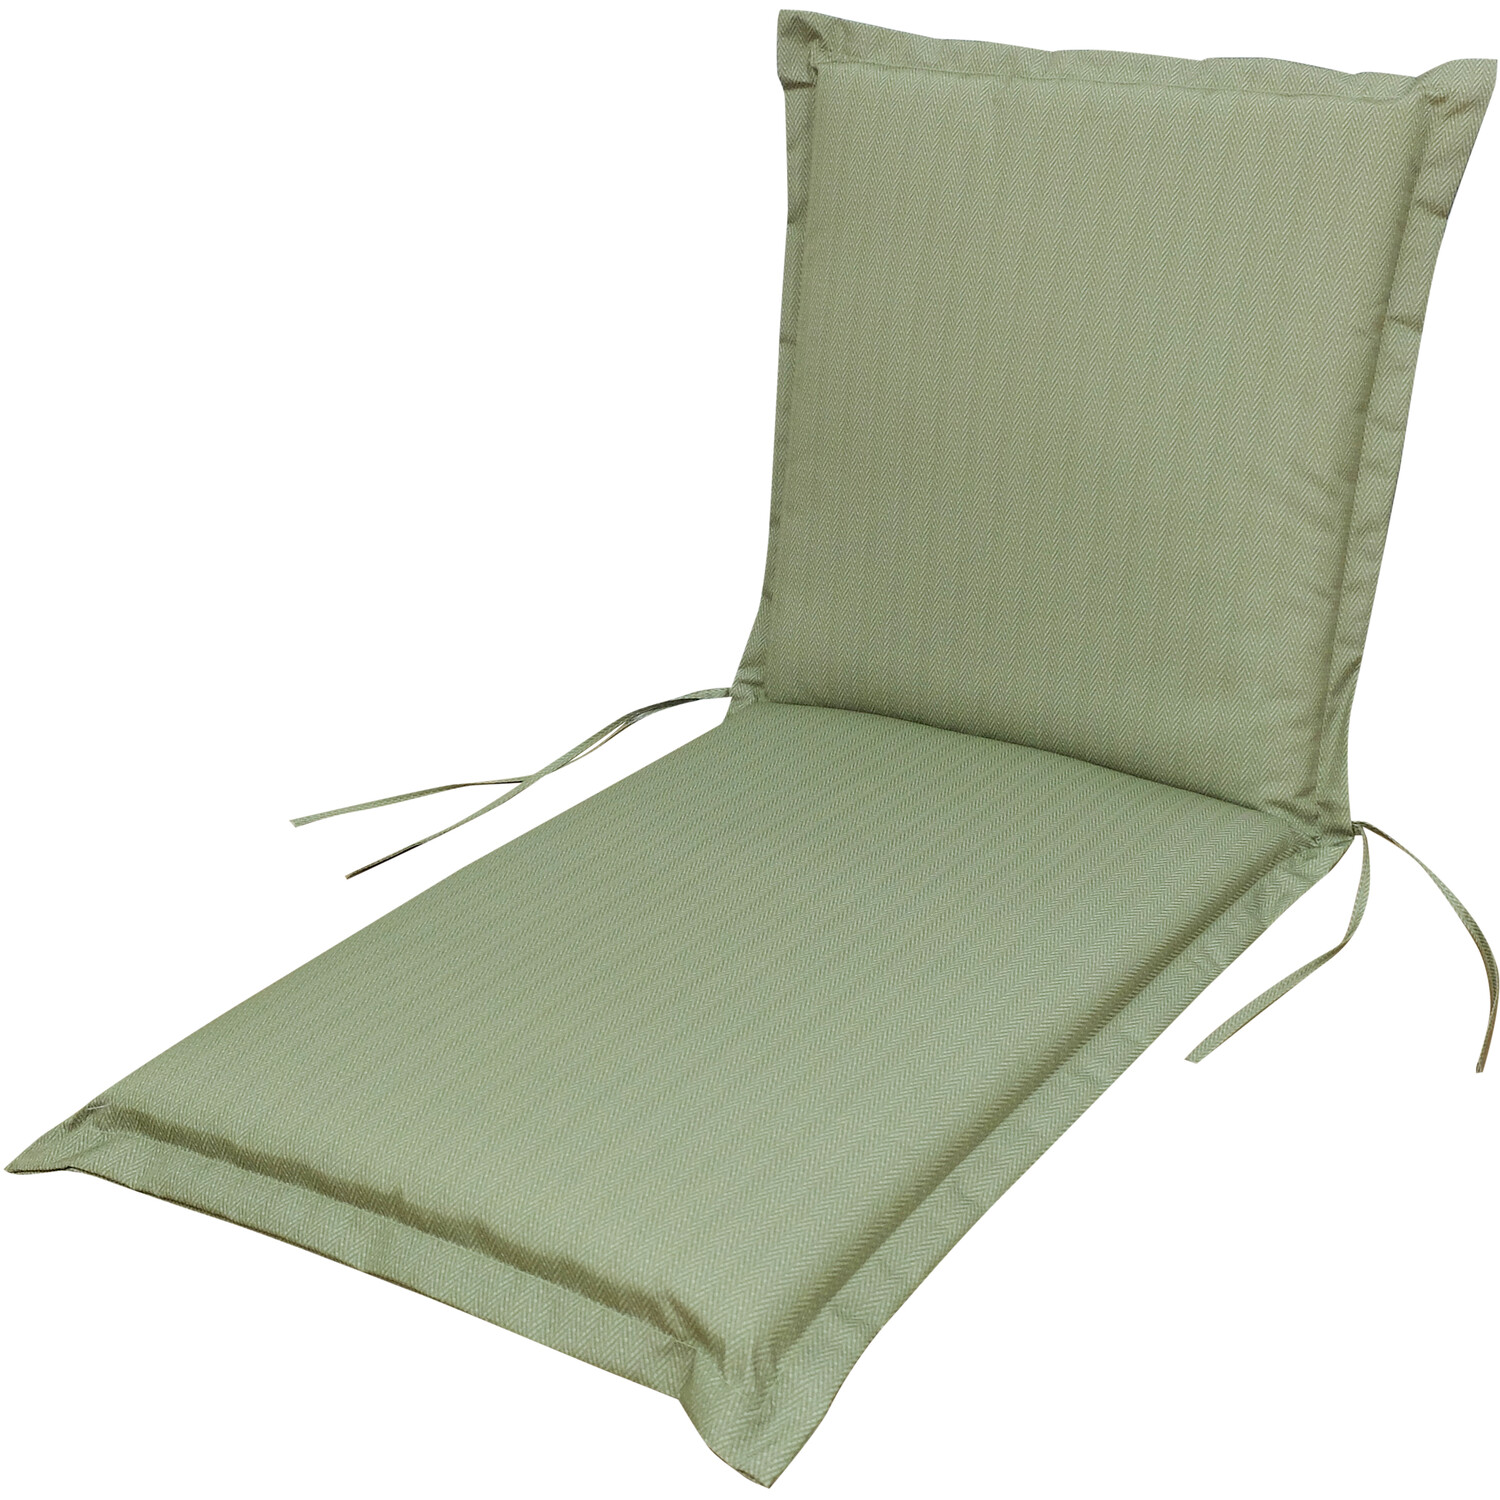 Malay Multi Position Cushions - Green Image